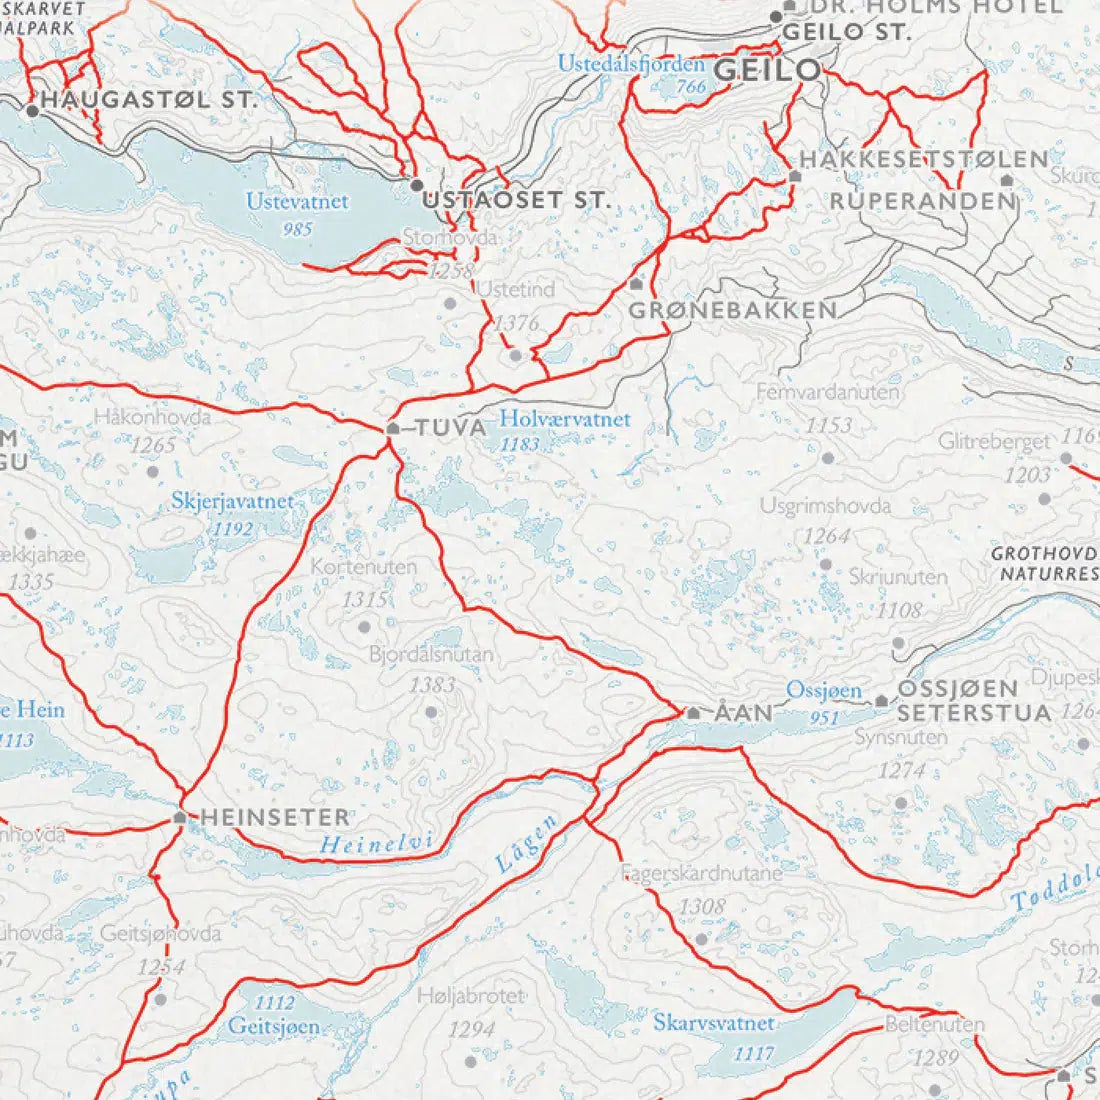 Hardangervidda turkart (50x70 cm)-Maps-Dapamaps-Hyttefeber